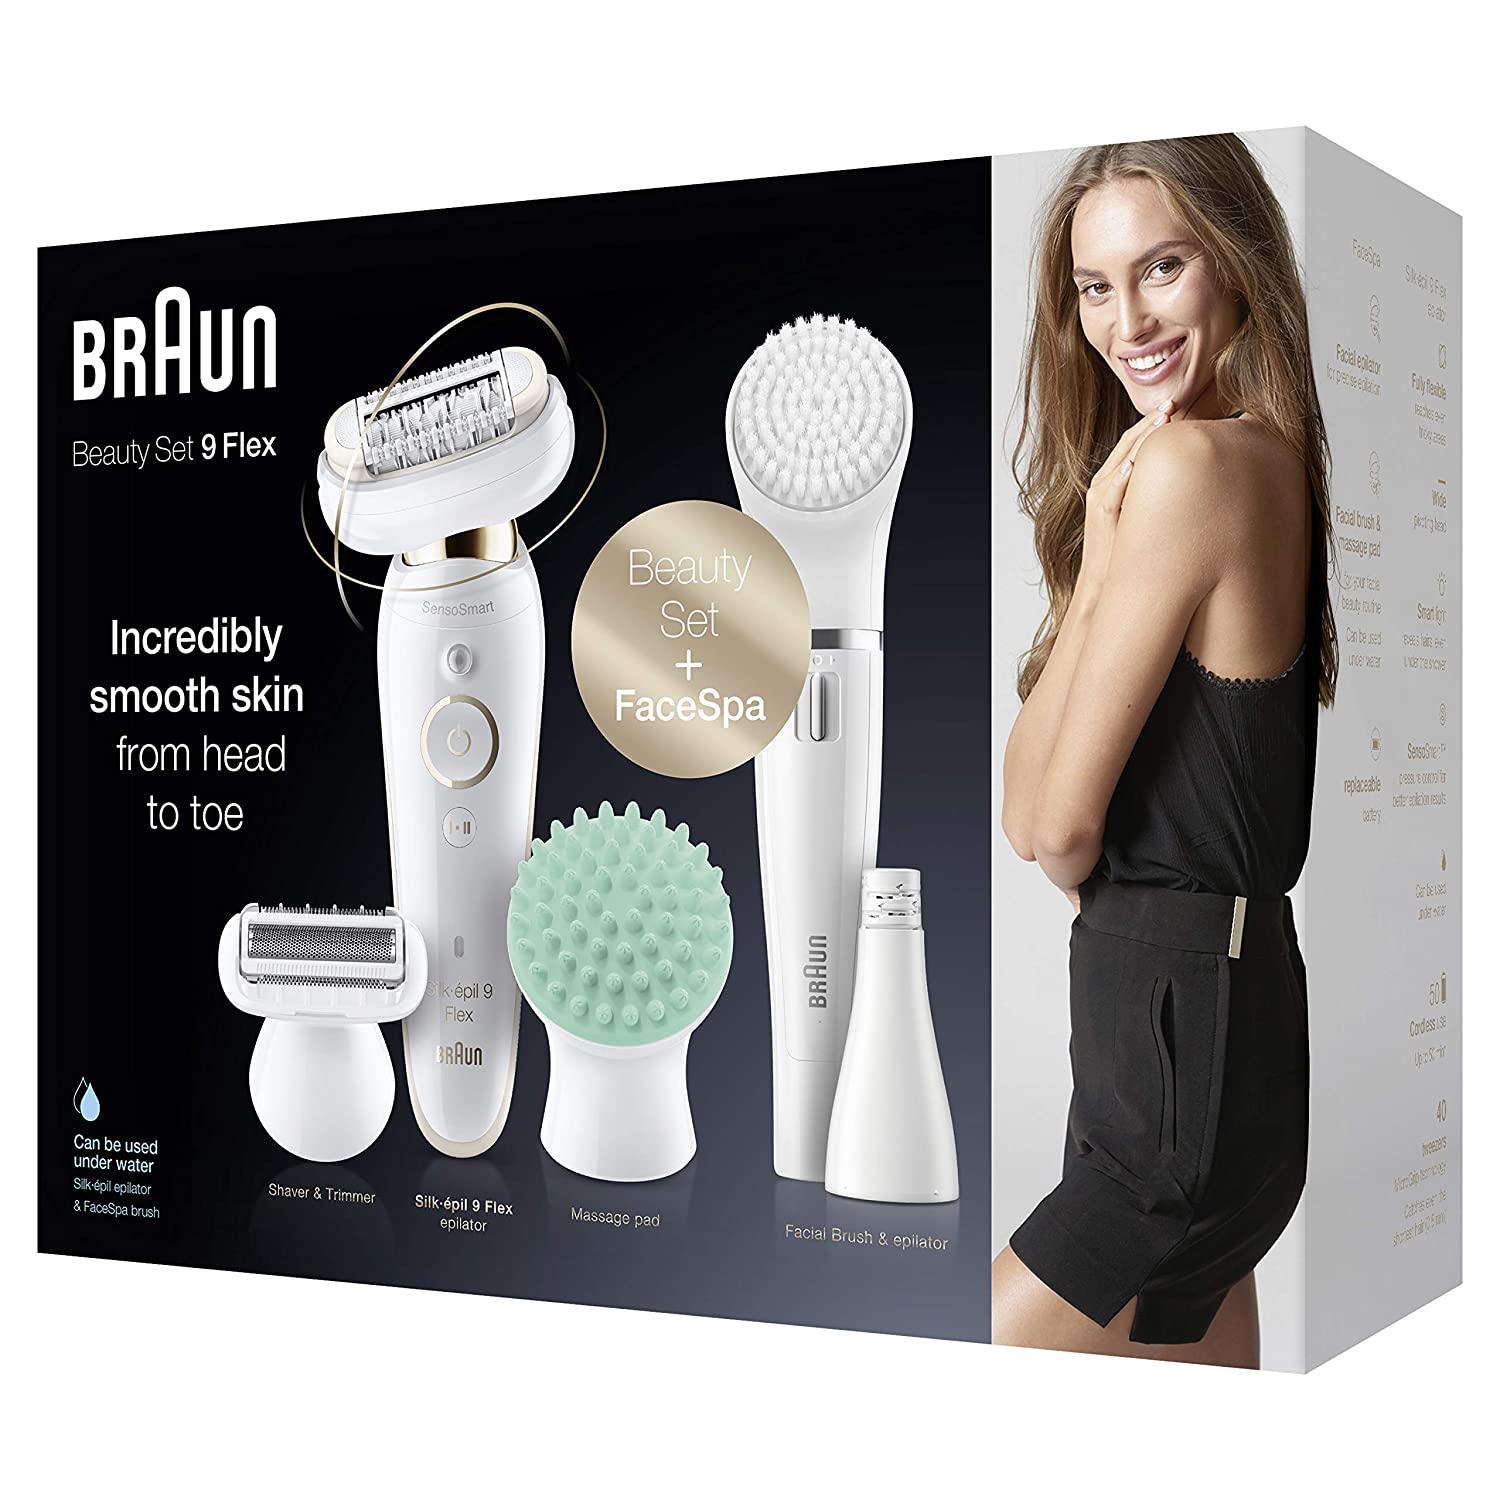 Braun Epilator Silk-pil 9 Flex 9-300 Beauty Set, Facial Hair Removal for  Women, Shaver & Trimmer, Cordless, Rechargeable, Wet & Dry, FaceSpa SE 9-300